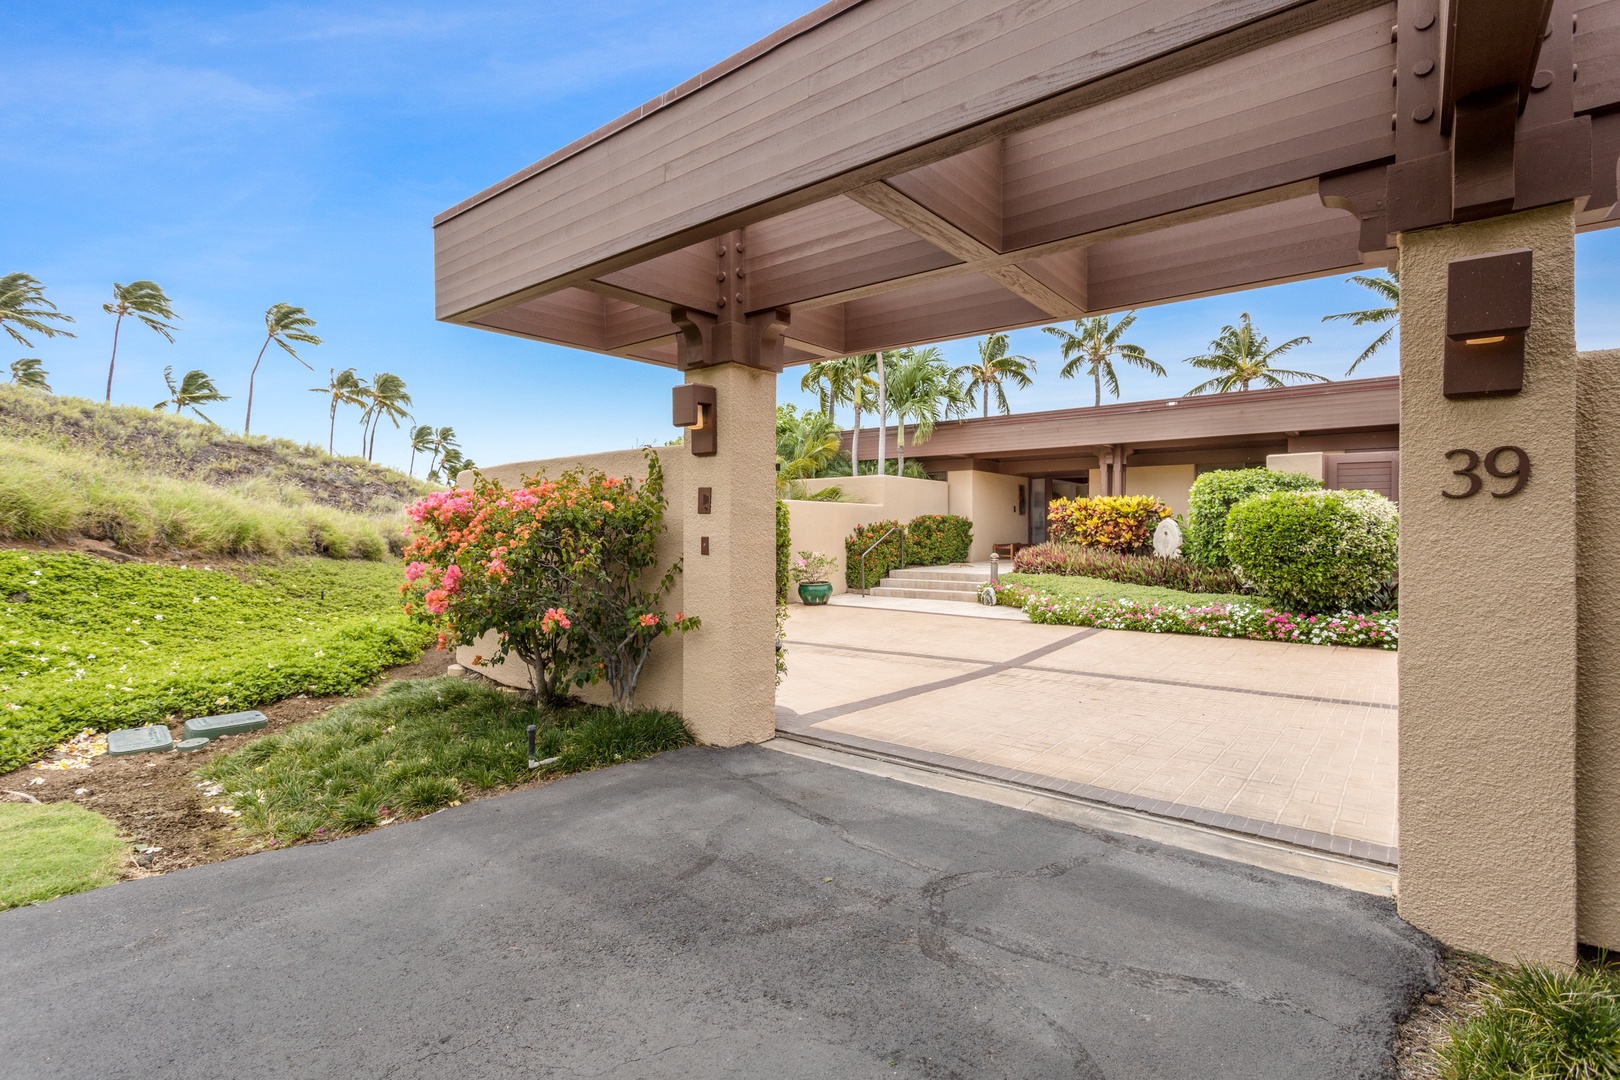 Kamuela Vacation Rentals, OFB 3BD Villas (39) at Mauna Kea Resort - Villa 39 gated private entrance highlighting prime corner location.